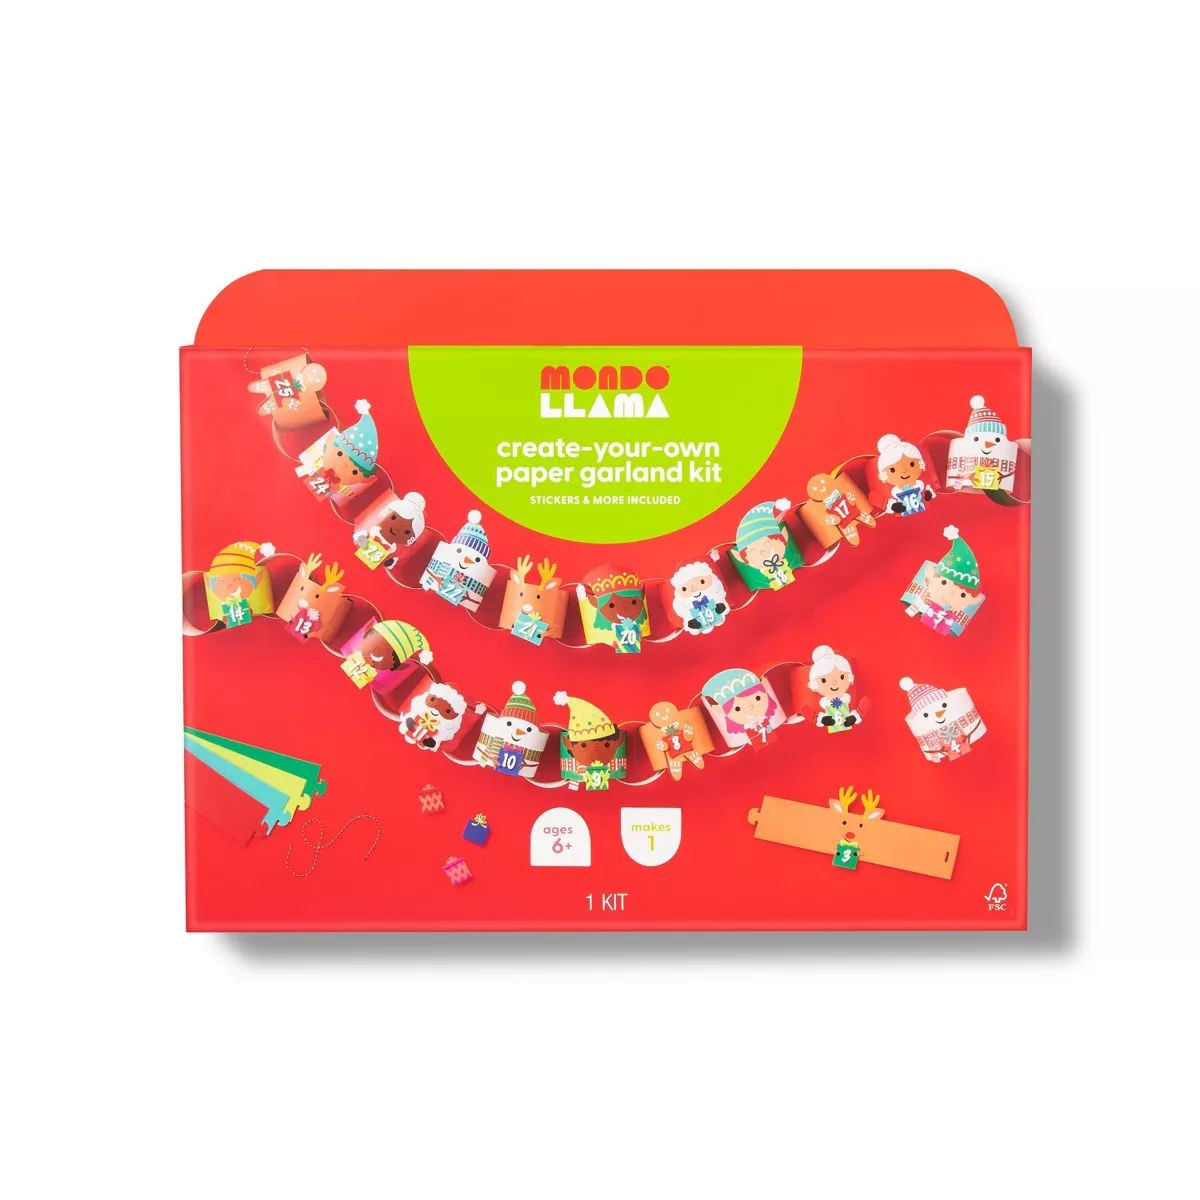 Create-Your-Own Paper Garland Kit - Mondo Llama™ | Target